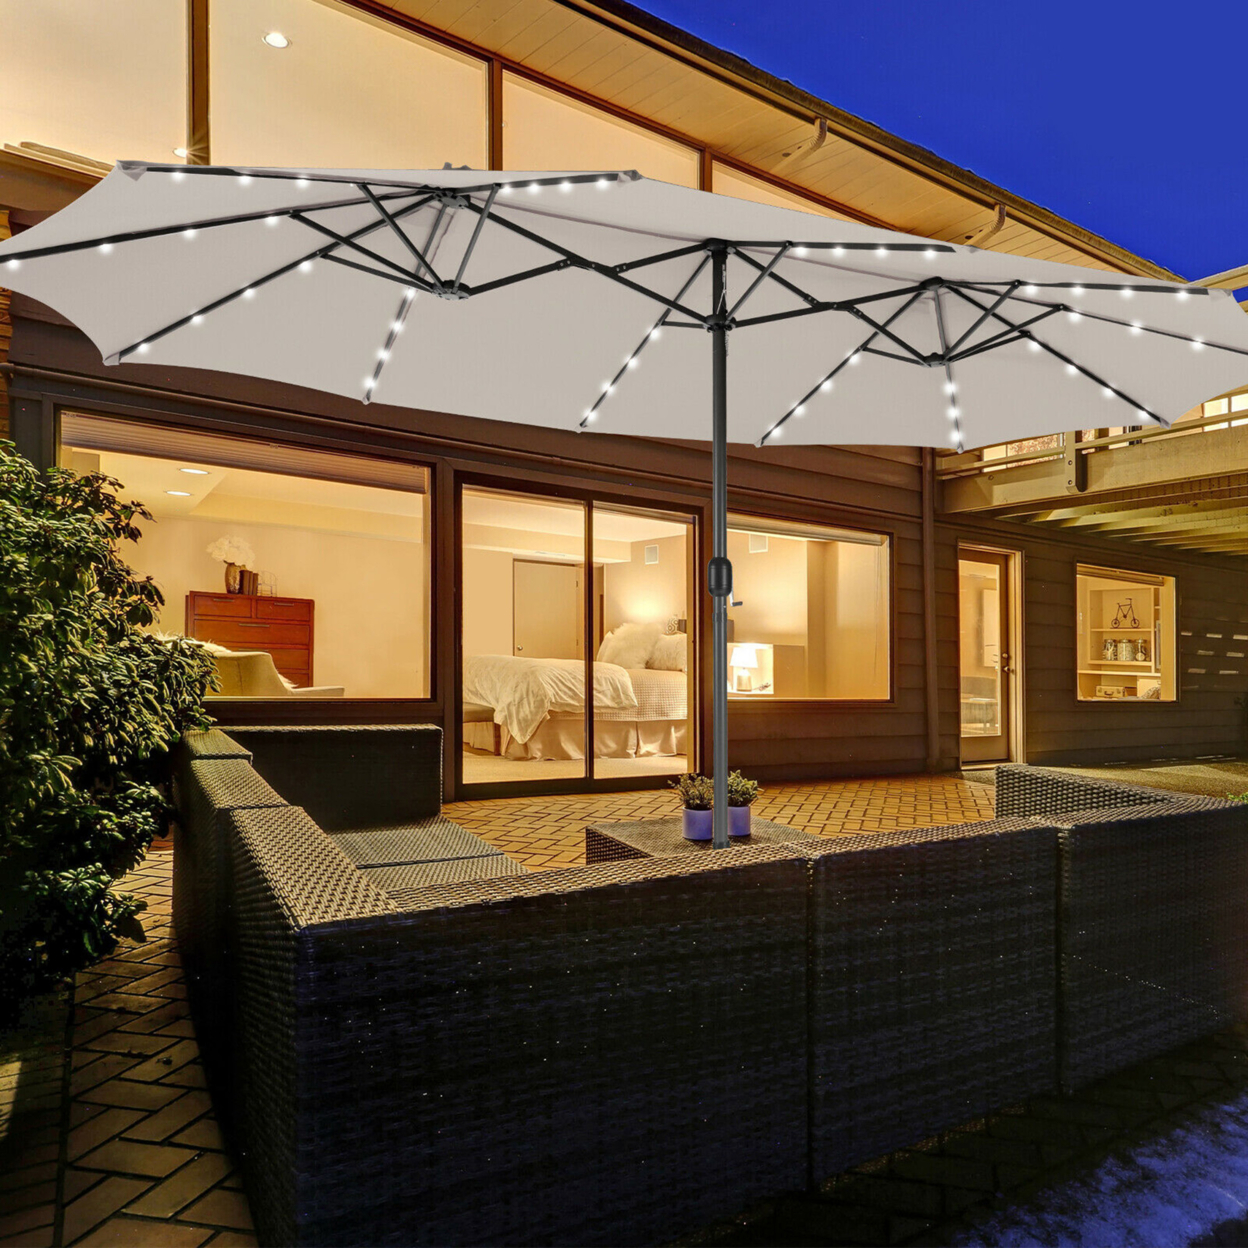 Outdoor 15' Double-Sided Patio Umbrella 48 Solar LED Lights Crank & Base - Beige